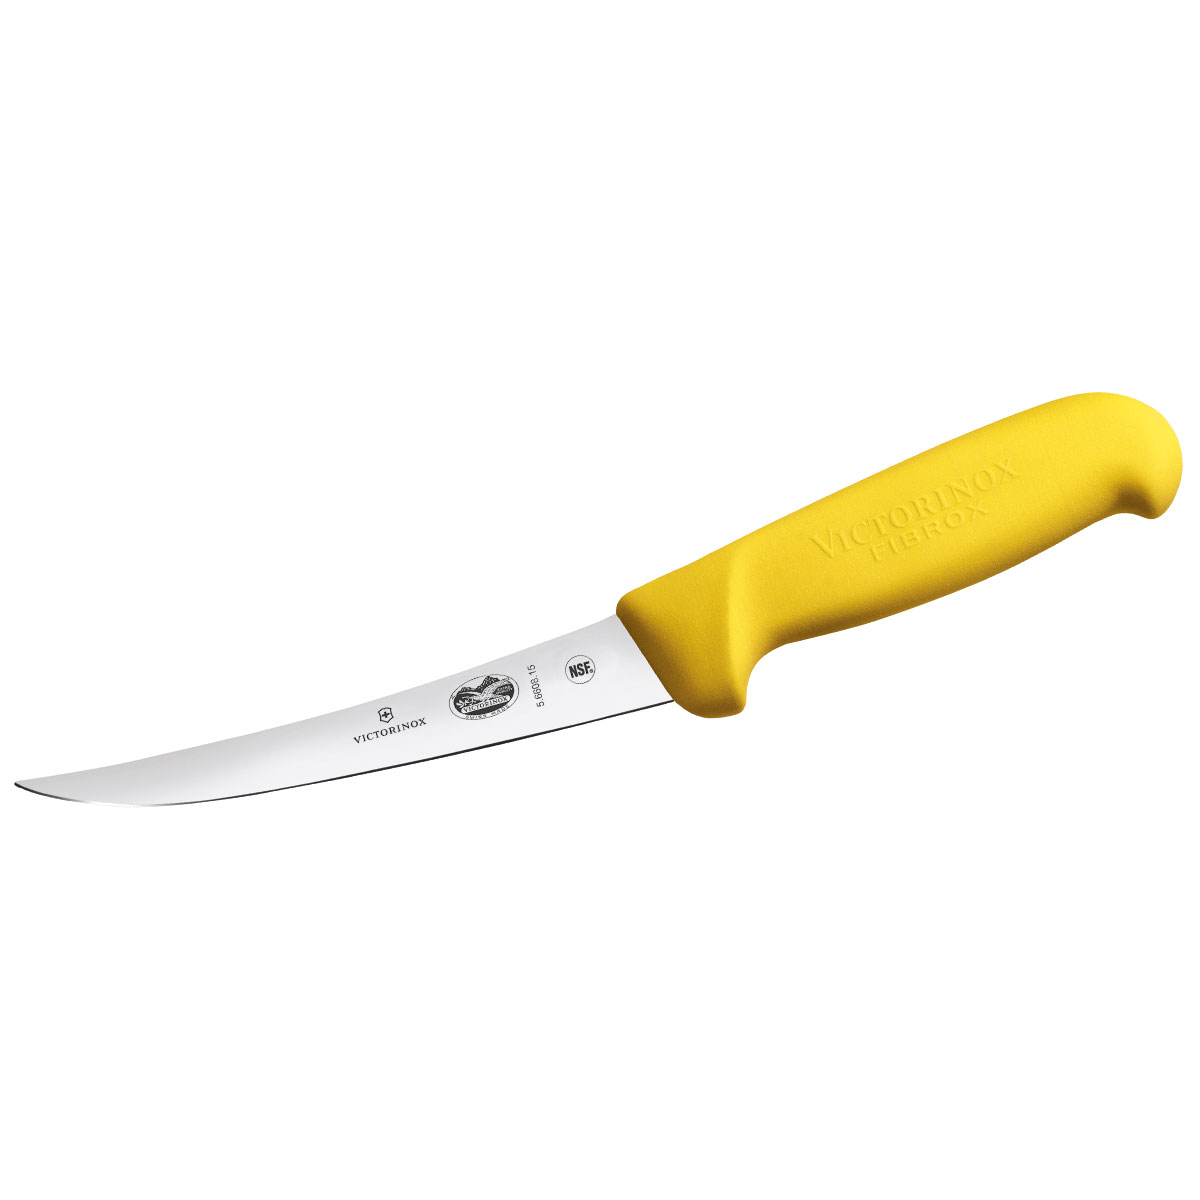 Victorinox Boning Knife, 15cm (6) - Curved, Narrow Blade - Yellow